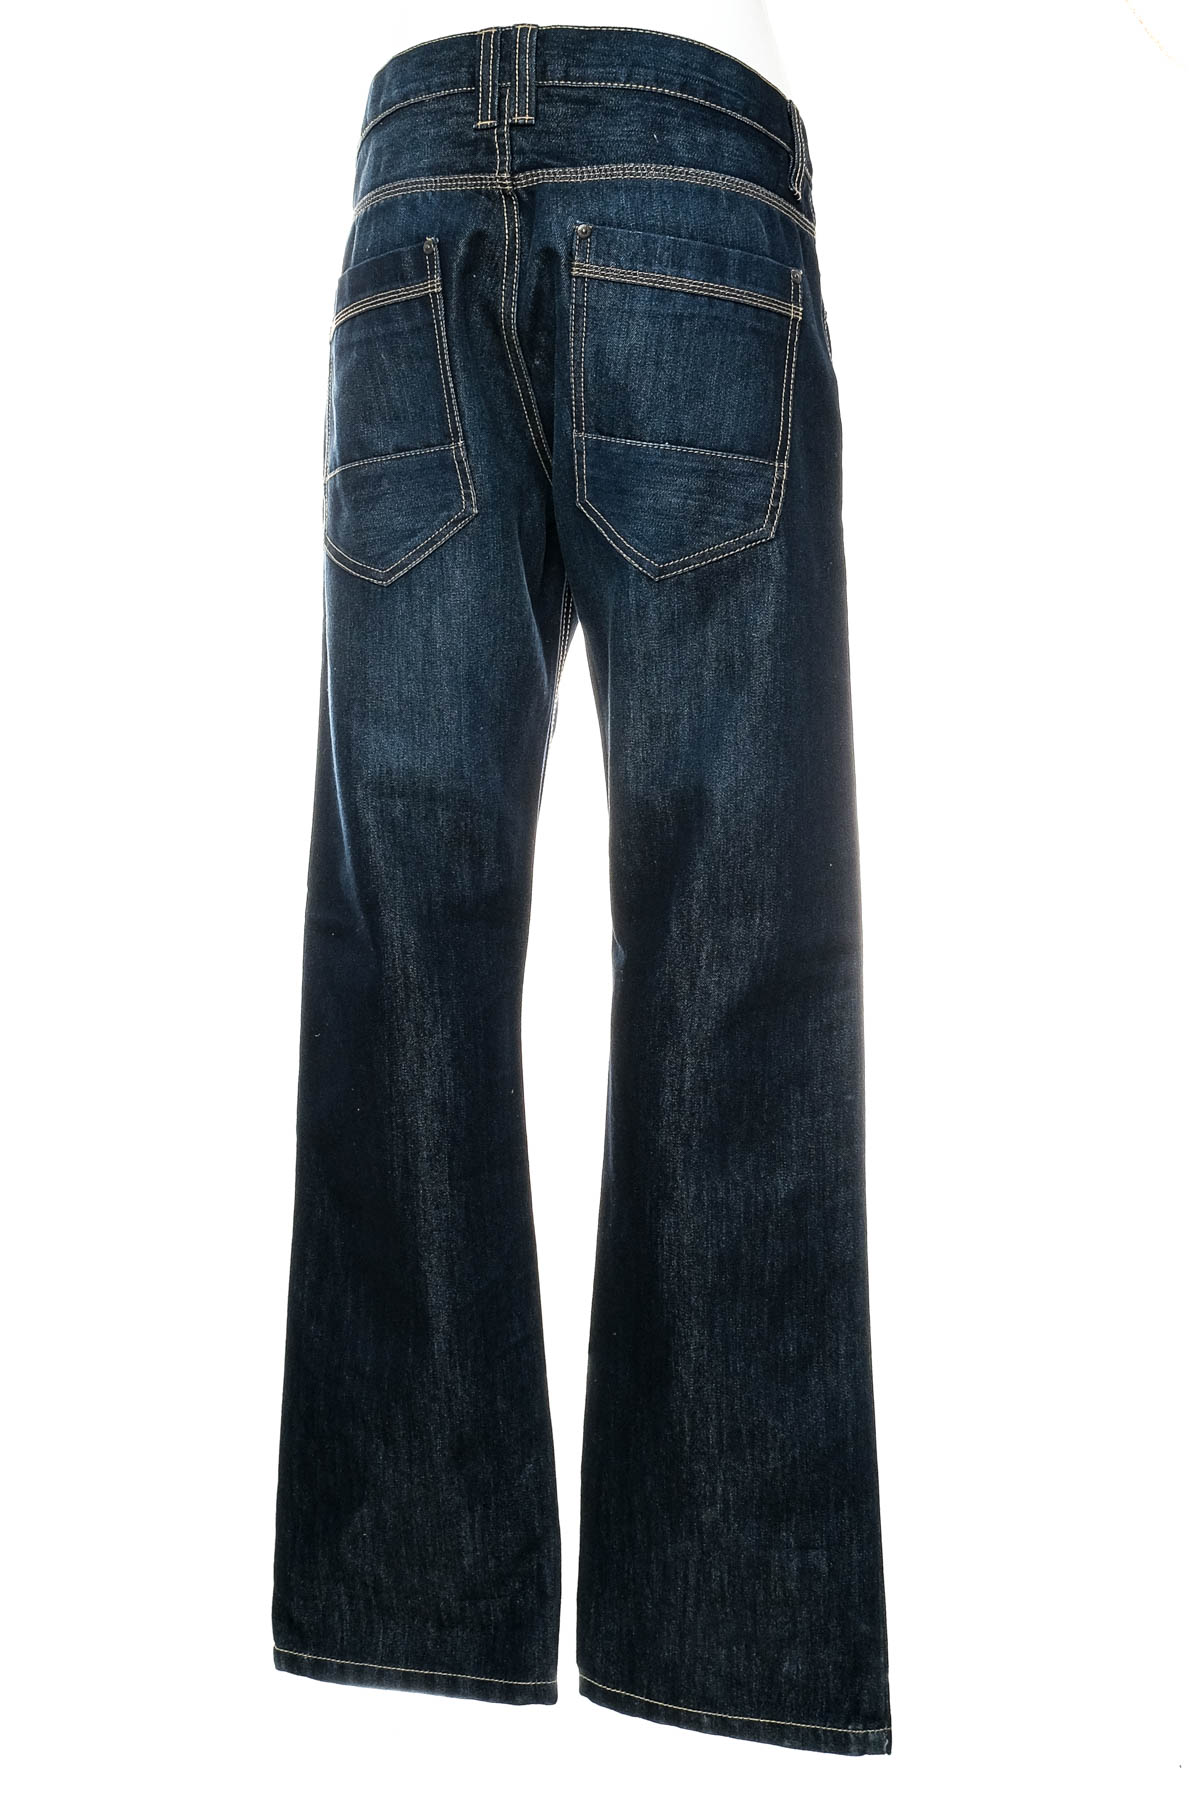 Men's jeans - LIVERGY - 1